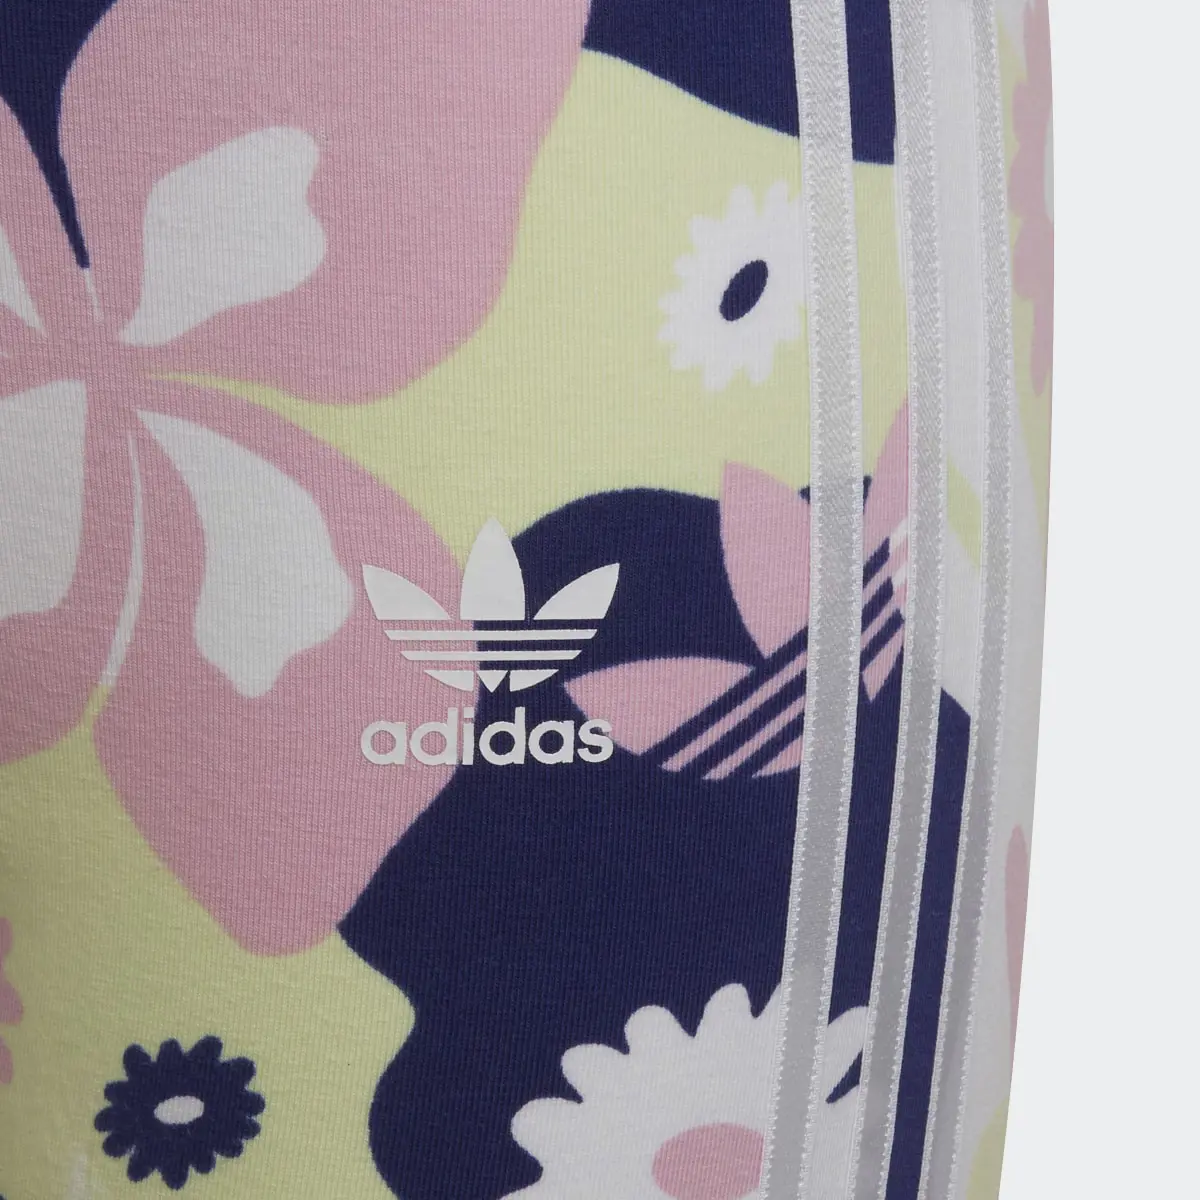 Adidas Short cysliste Allover Flower Print. 3